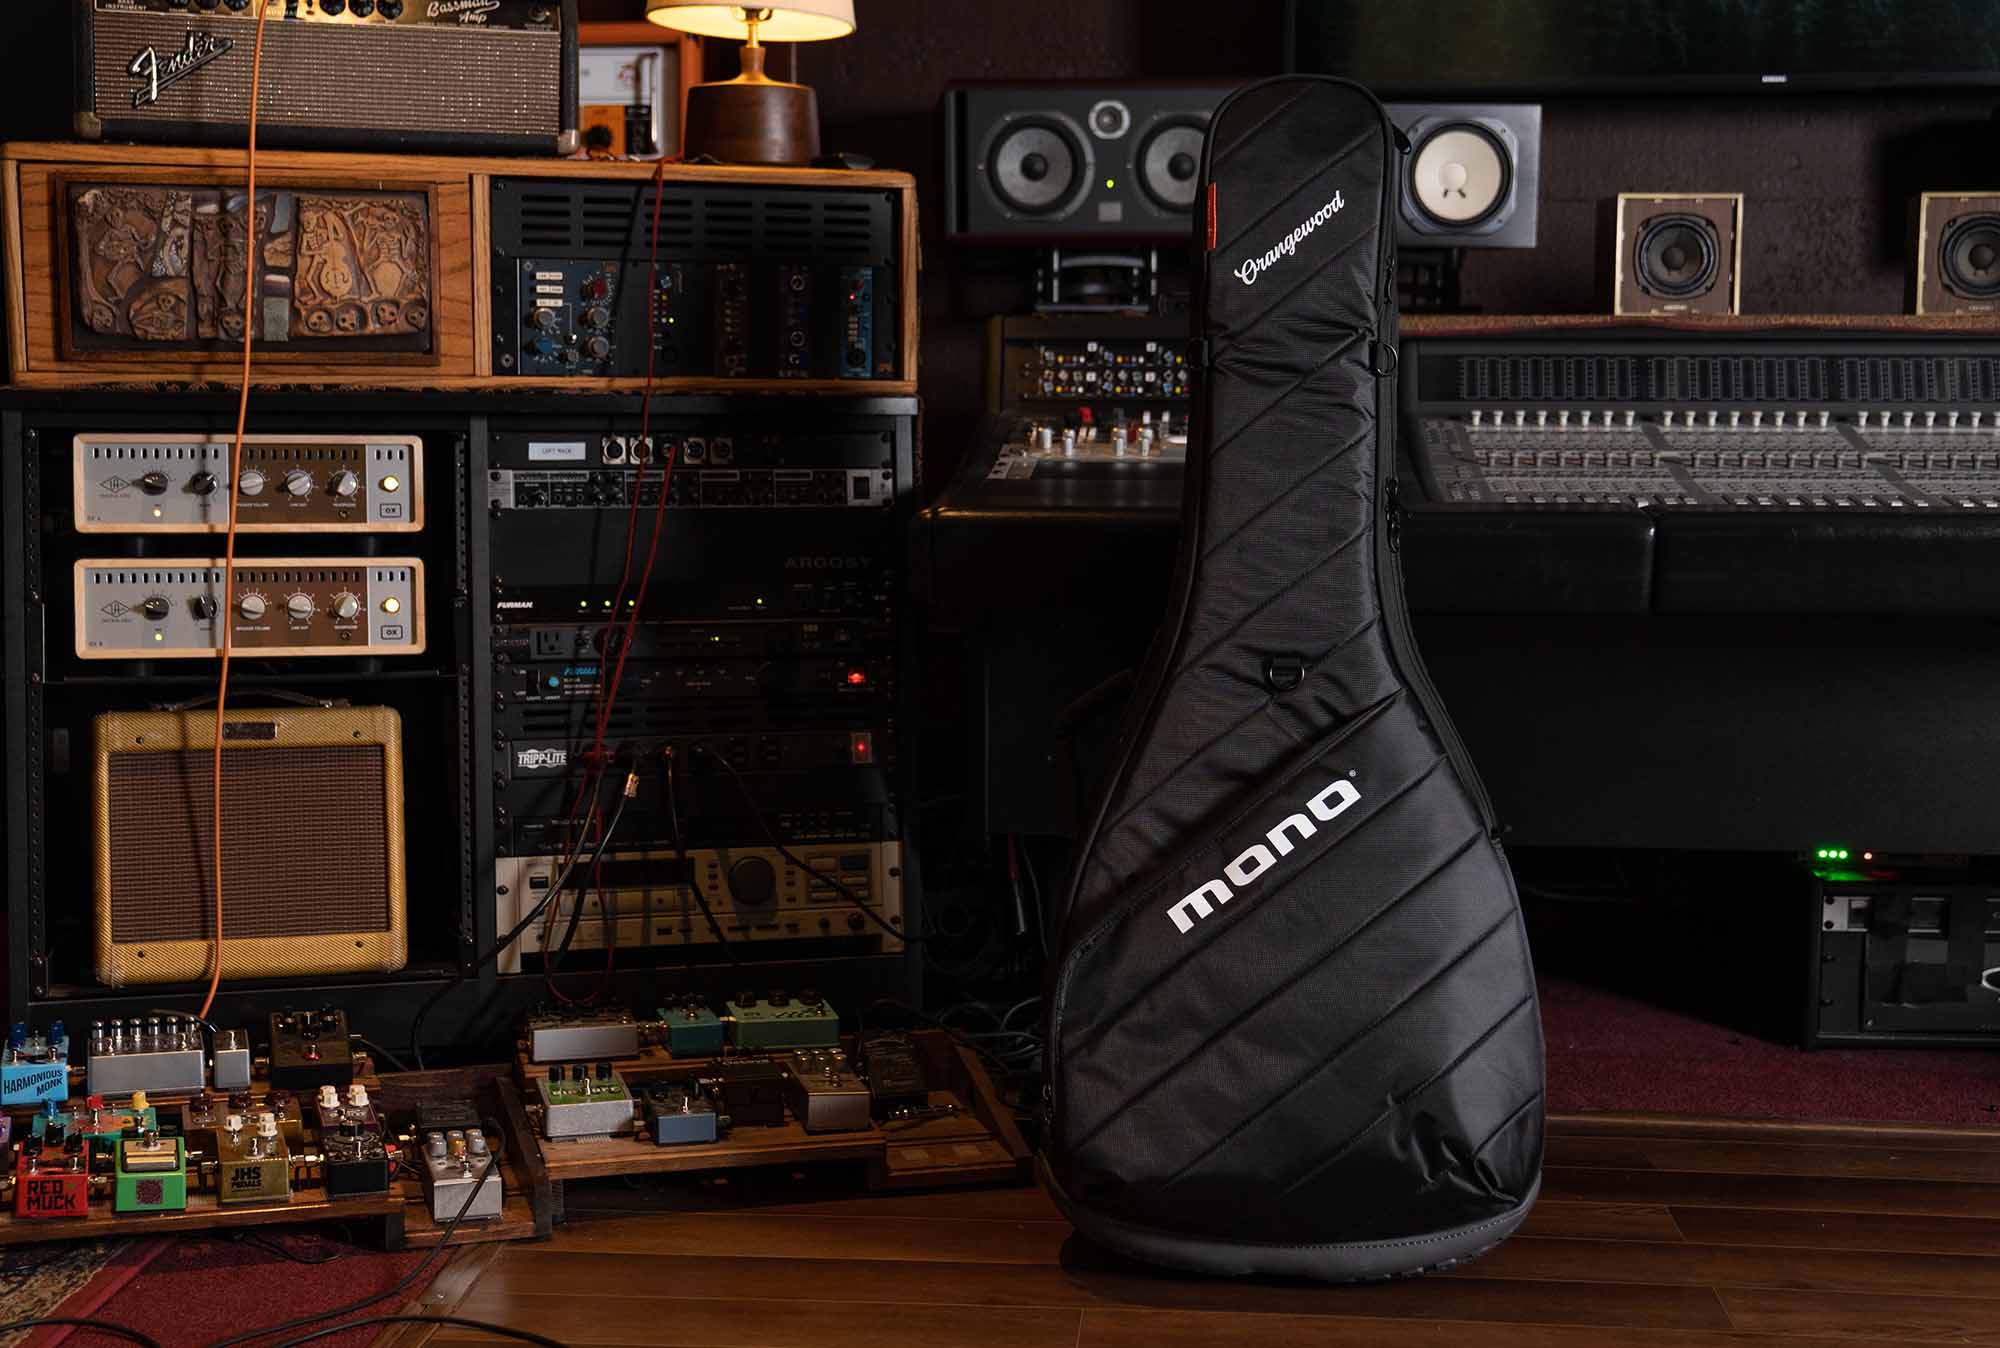 Mono Vertigo guitar case with orangewood logo in front of a recording studio soundboard